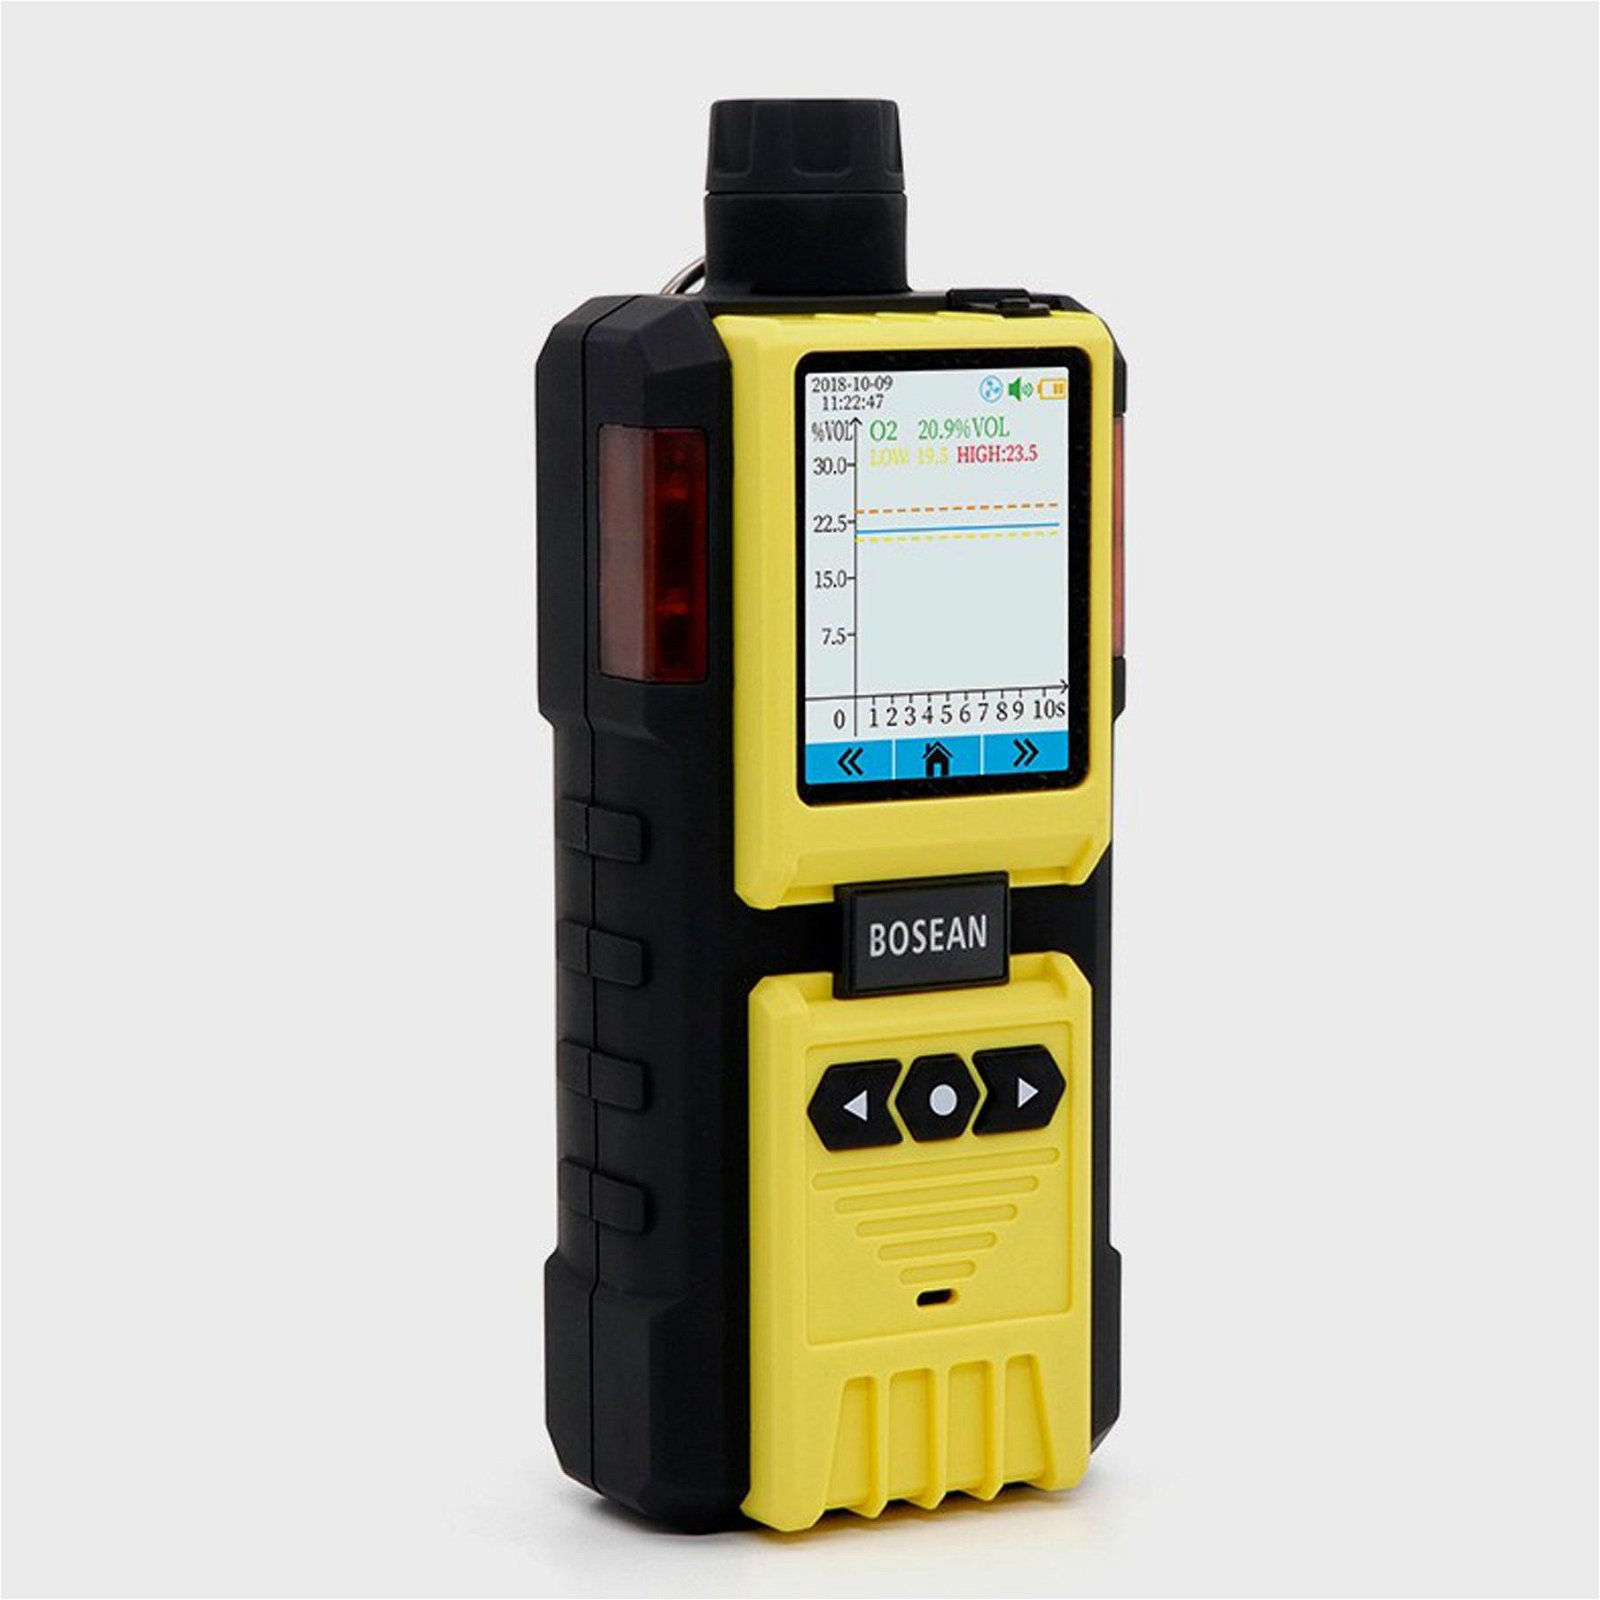 Pumping O3 Gas Detector K-600 Ozone meter Industrial Alarm detector 0-50ppm 2